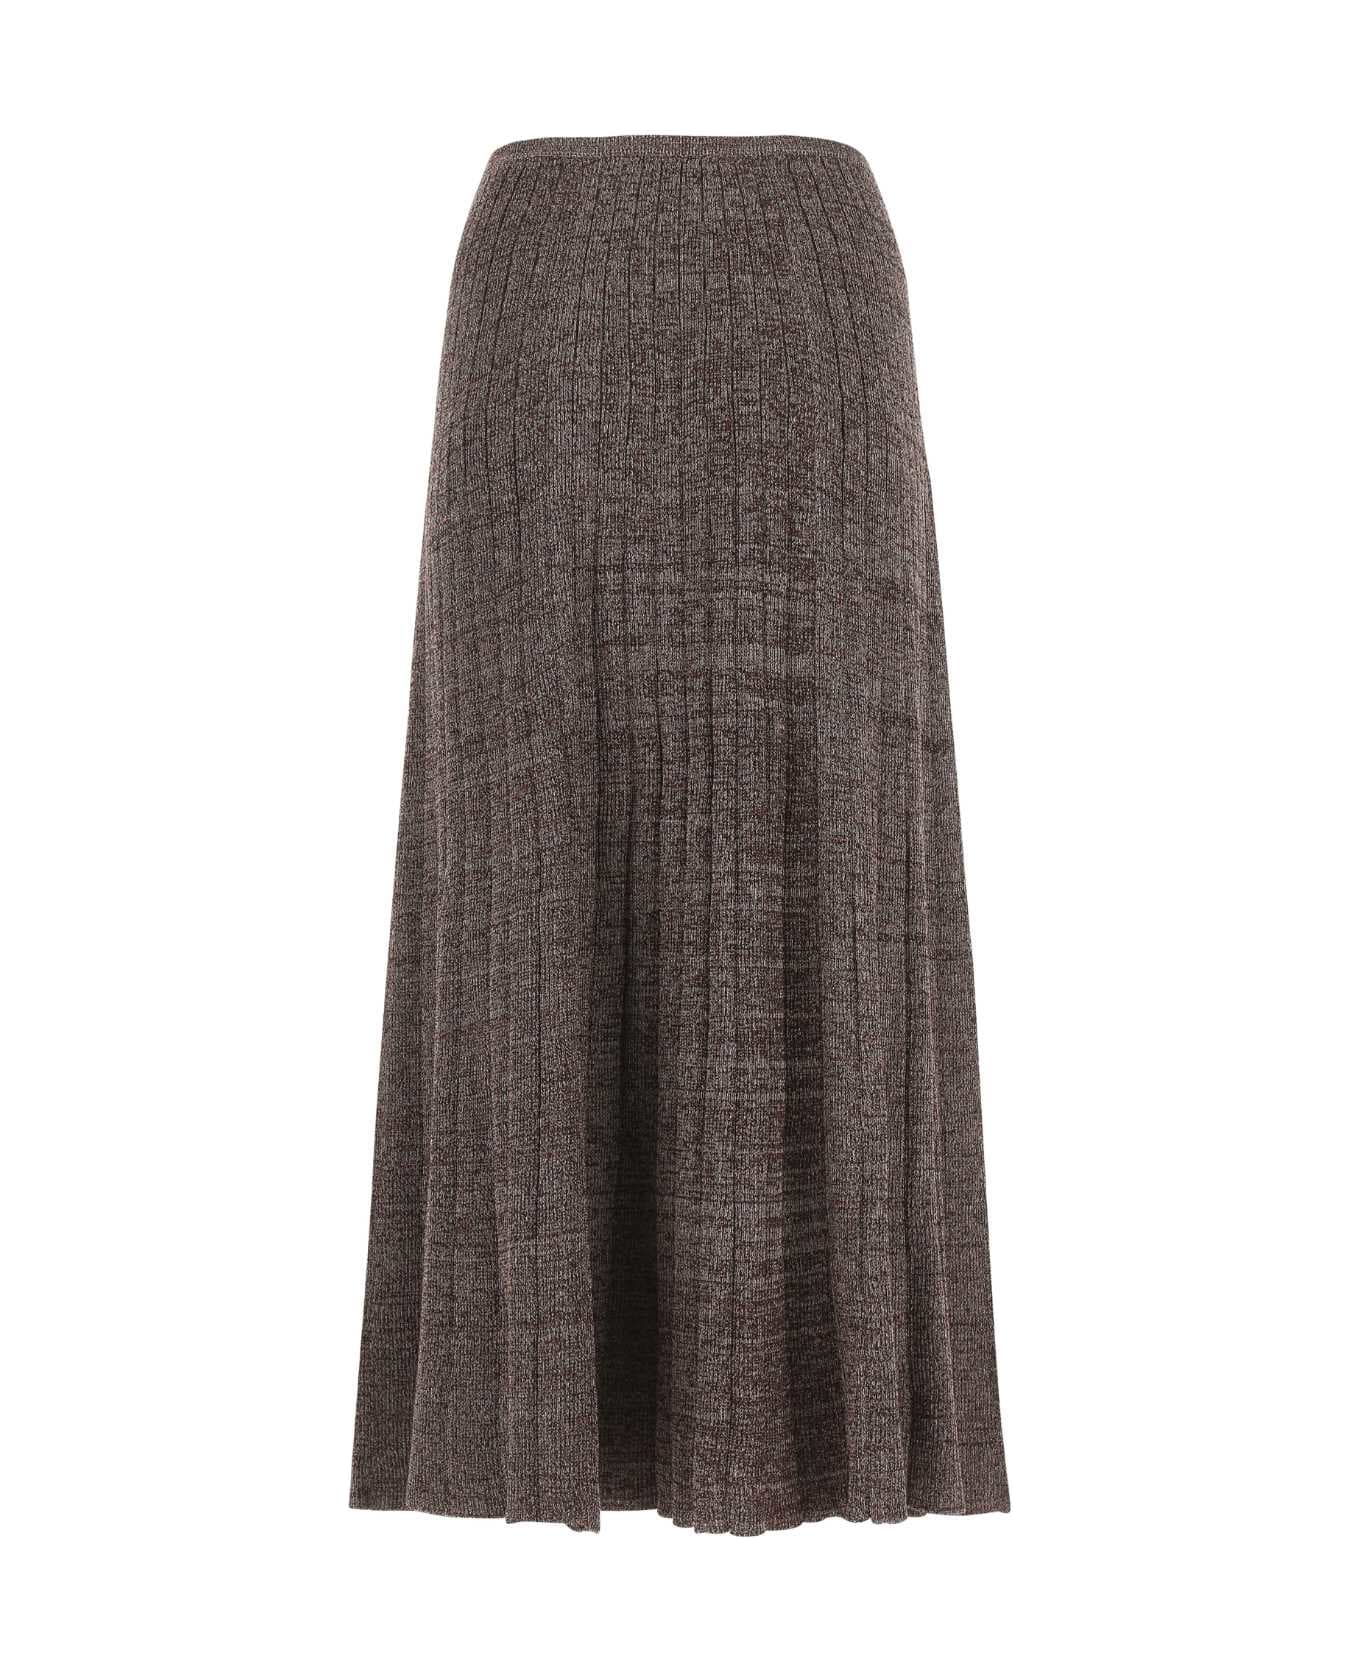 Tory Burch Multicolor Cotton Blend Skirt - 610 スカート